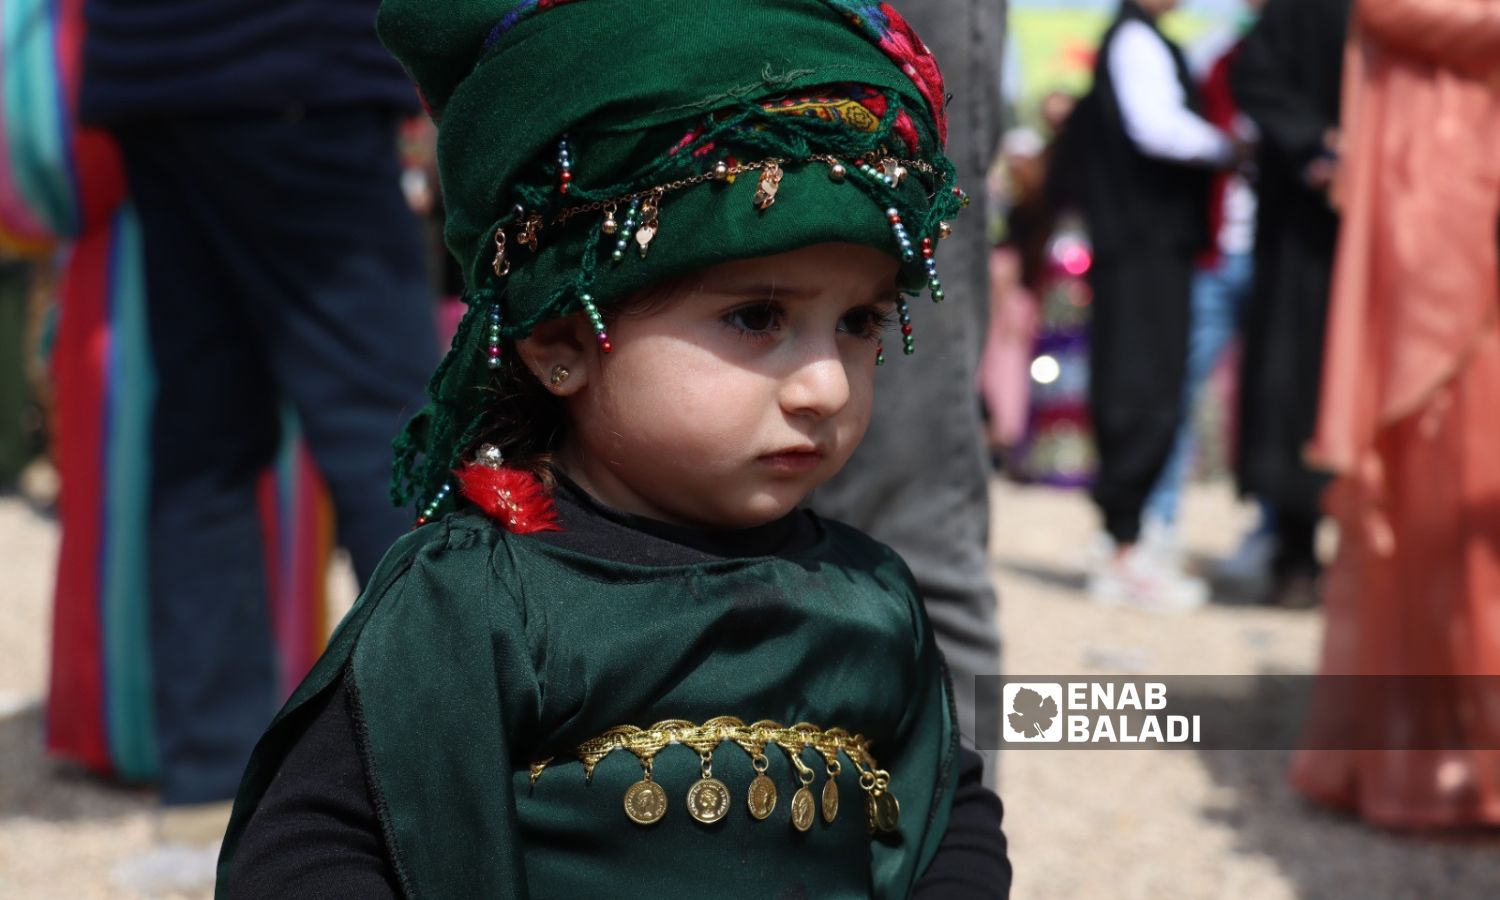 A child in Kurdish clothing during the Nowruz celebrations in the city of Qamishli, northeast Syria - March 21, 2023 (Enab Baladi)